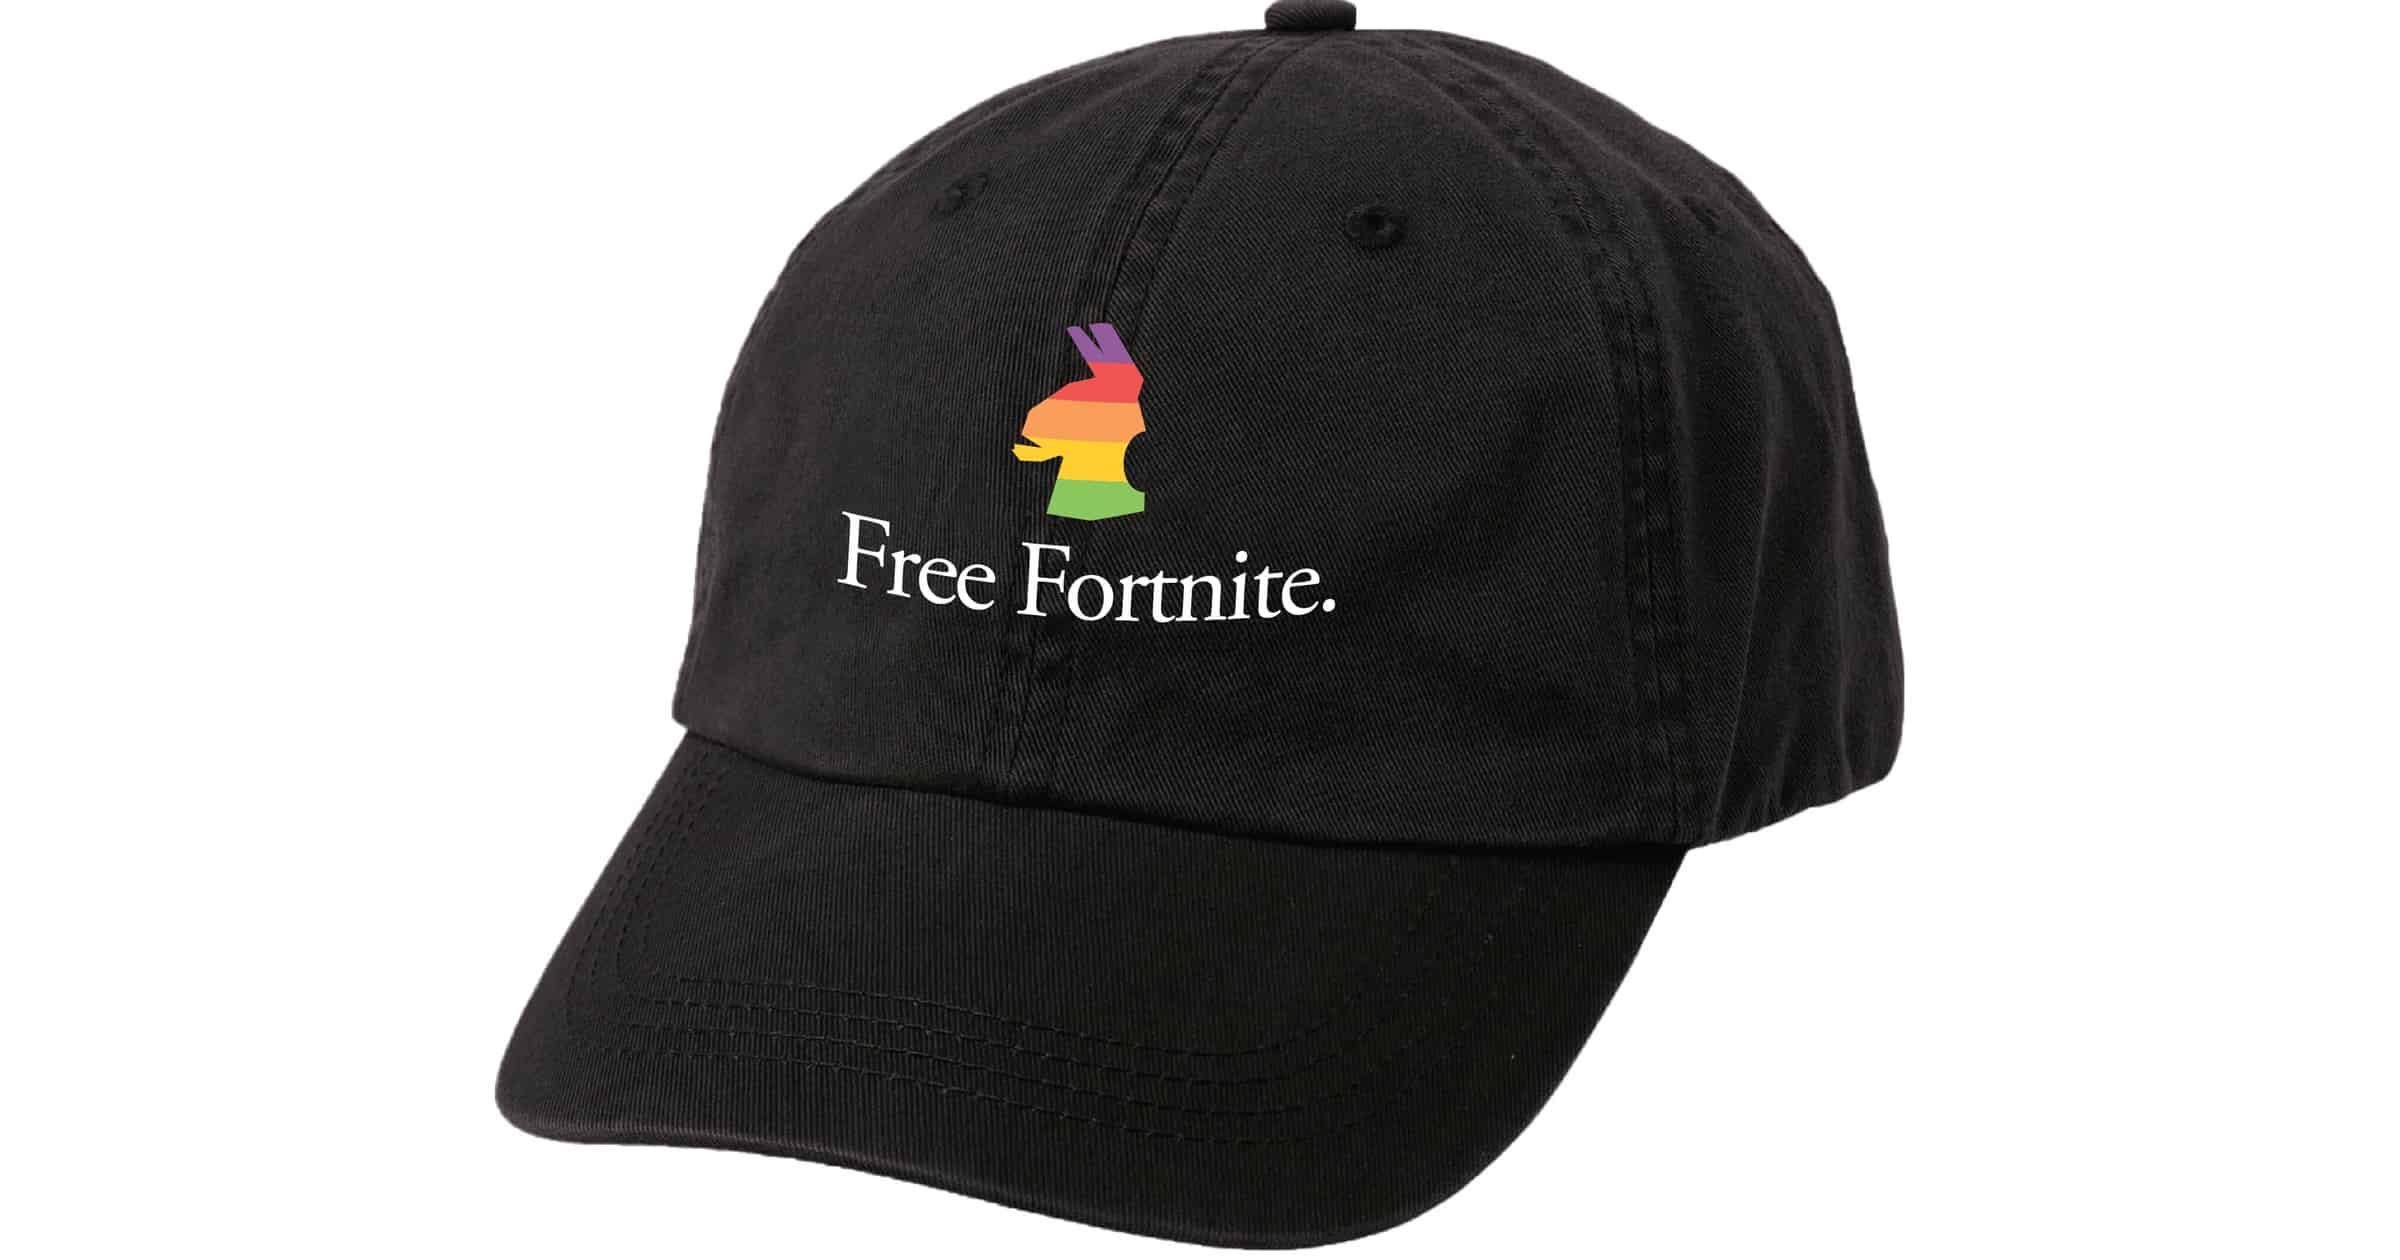 #FreeFortnite hat